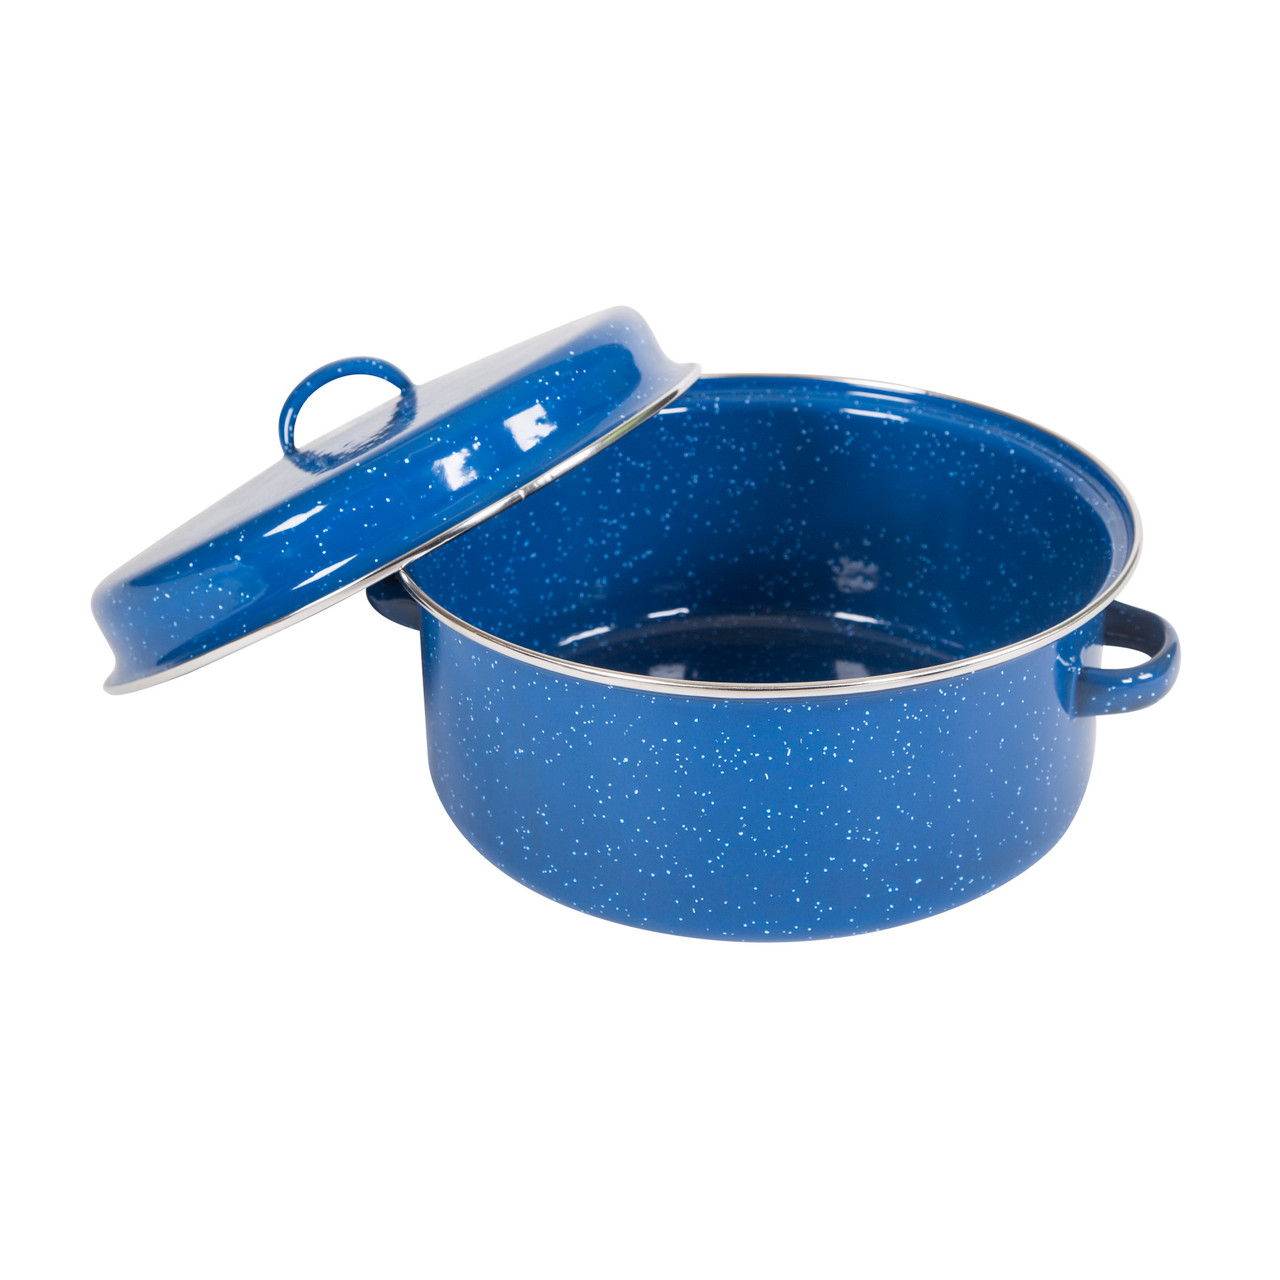 Araven 31211 Pot Handle Holder, Blue